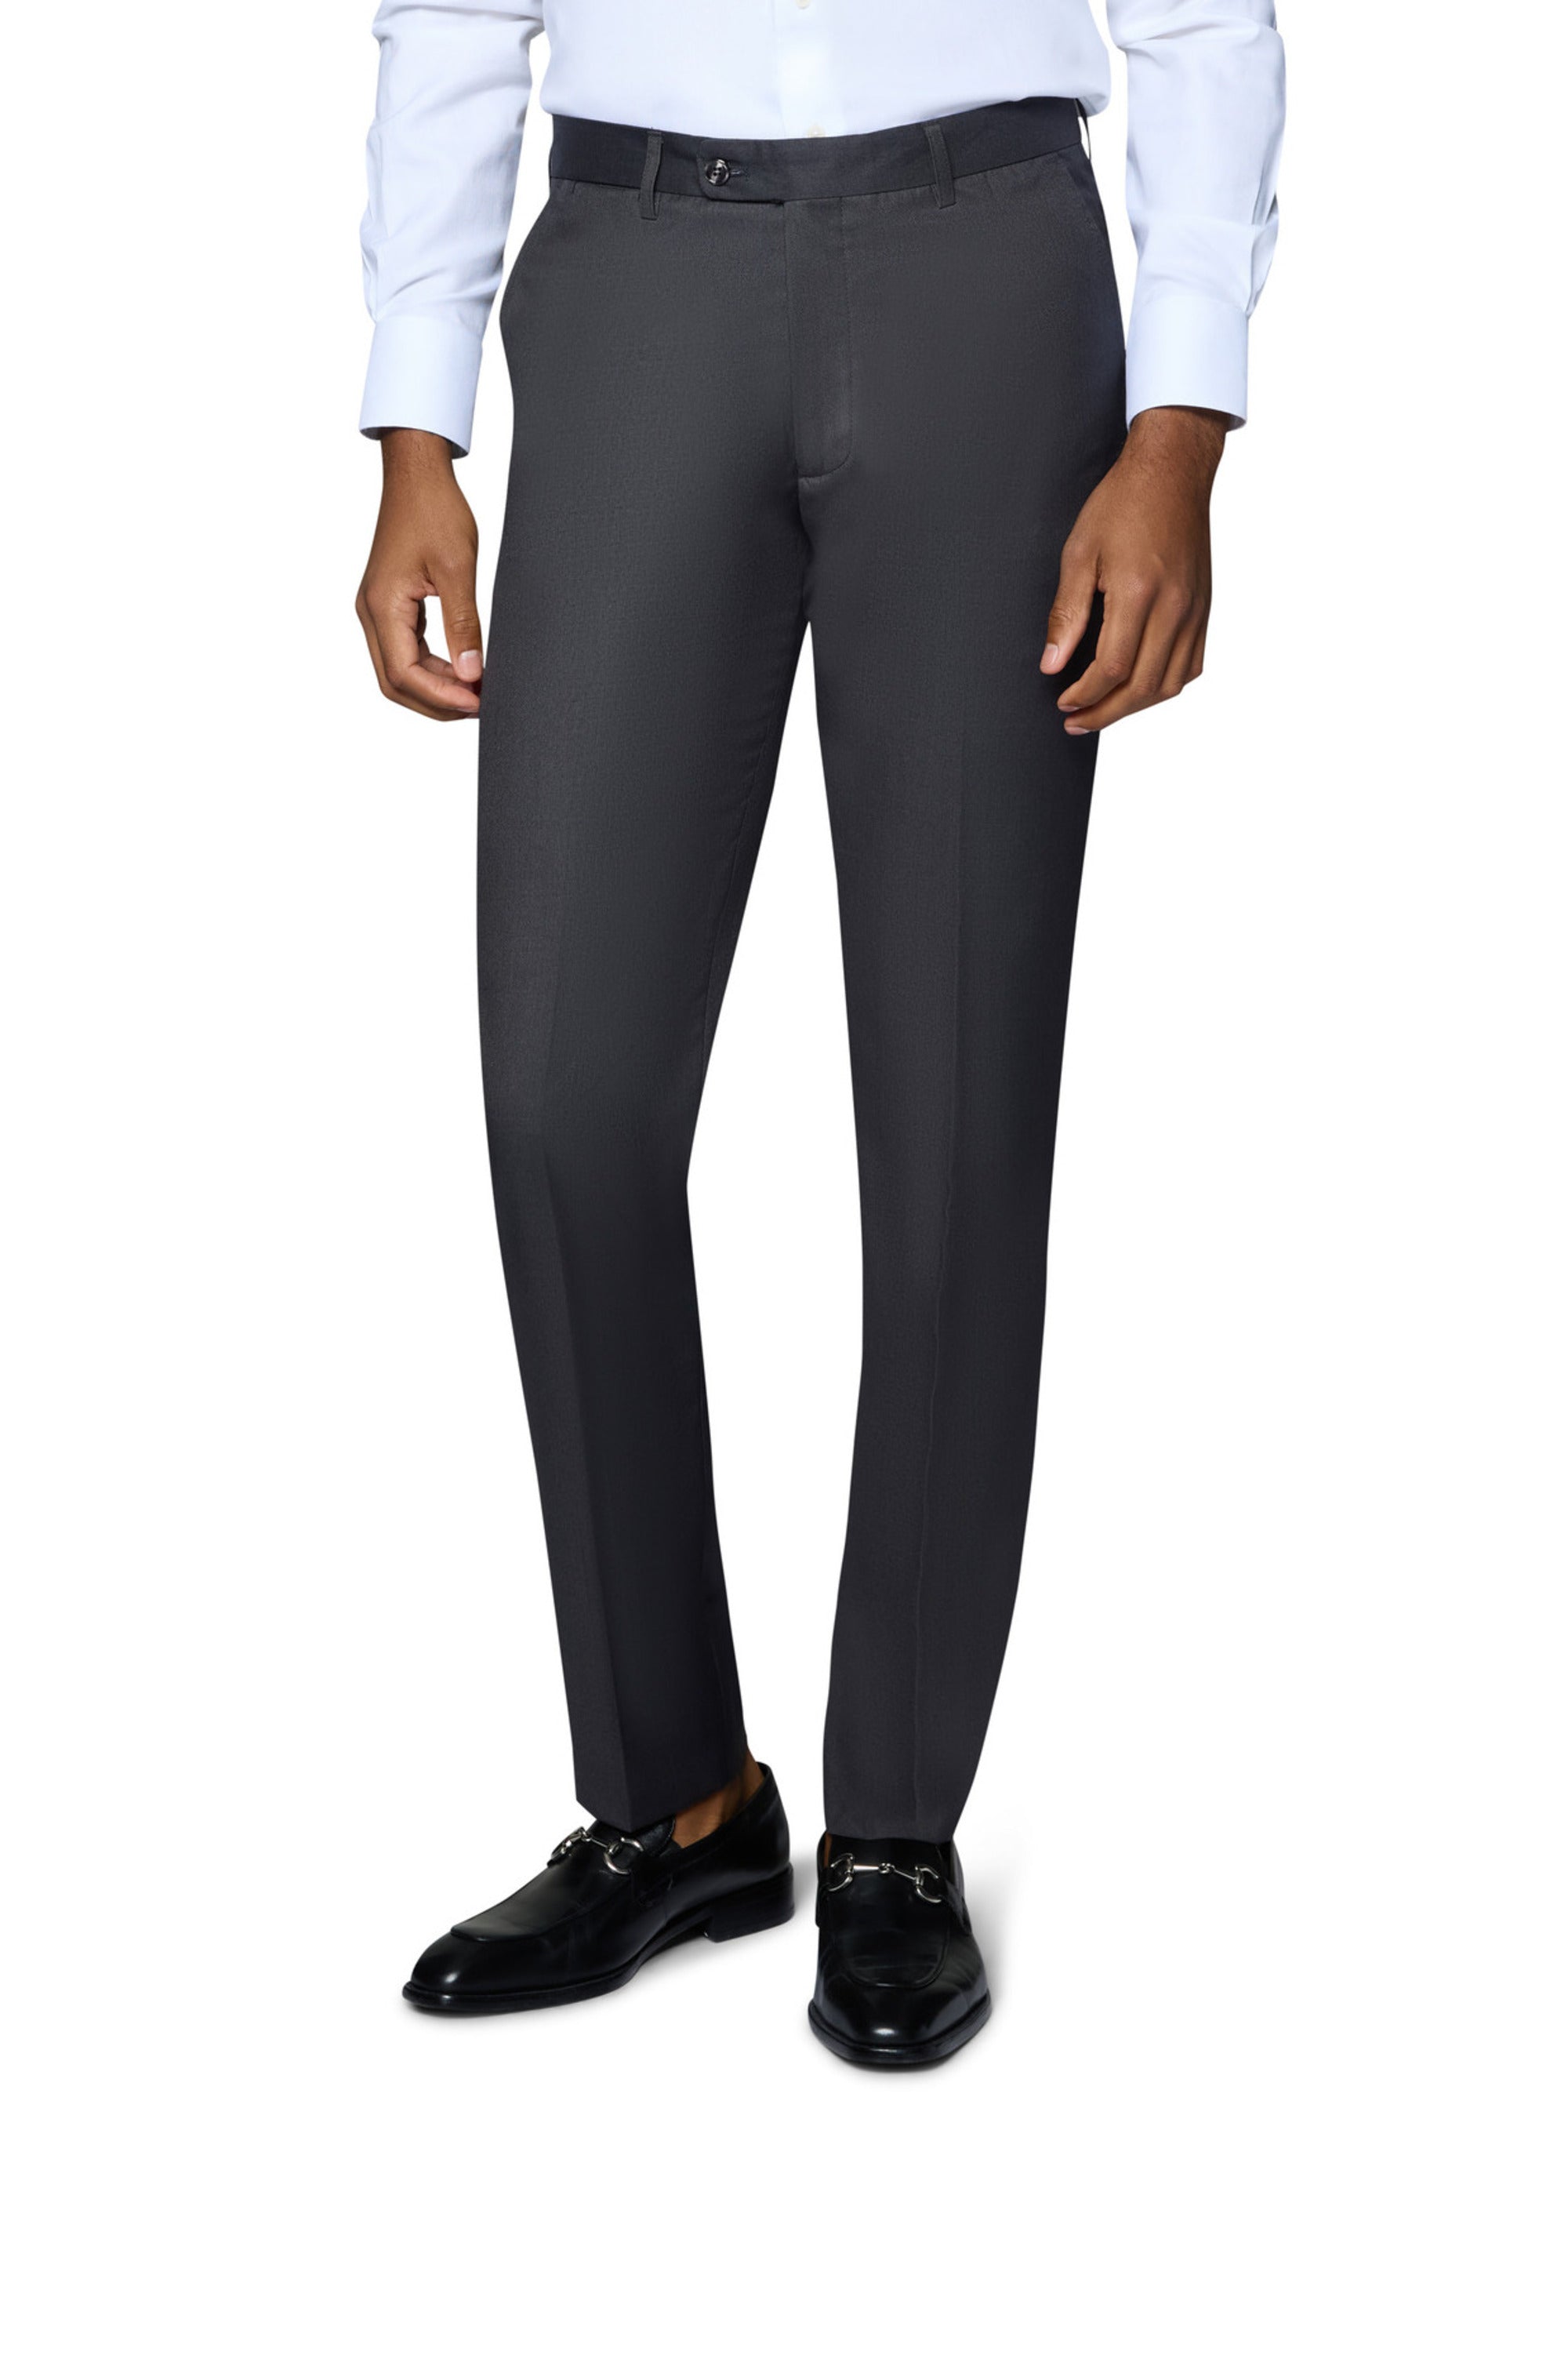 Berragamo Solid Slim Fit Pants - Charcoal